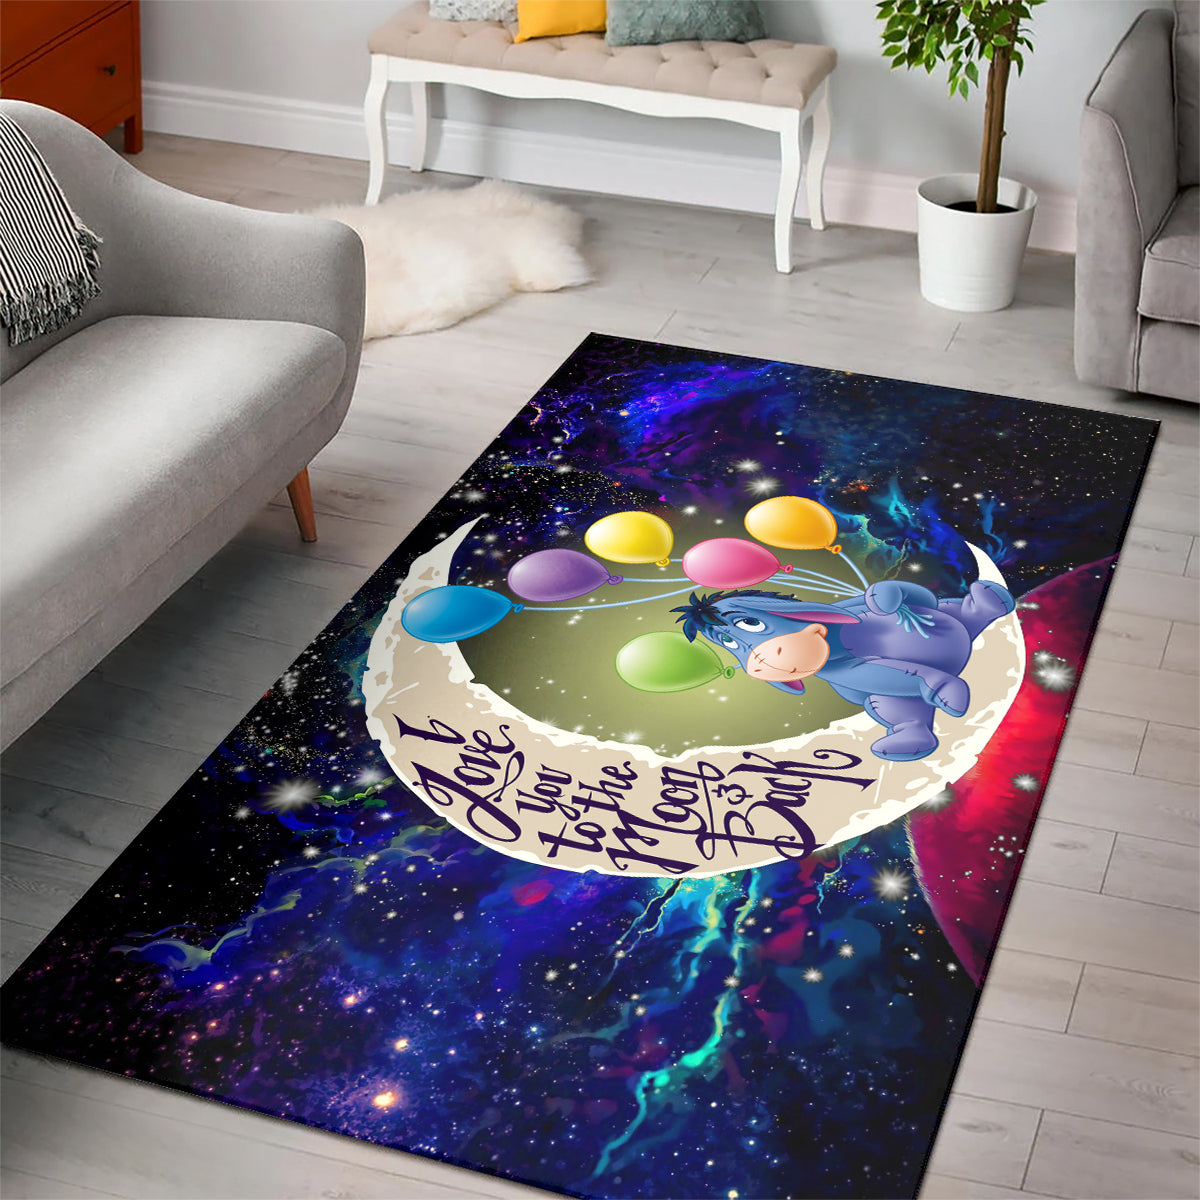 Eeyore Winnie The Pooh Love You To The Moon Galaxy Carpet Rug Home Room Decor